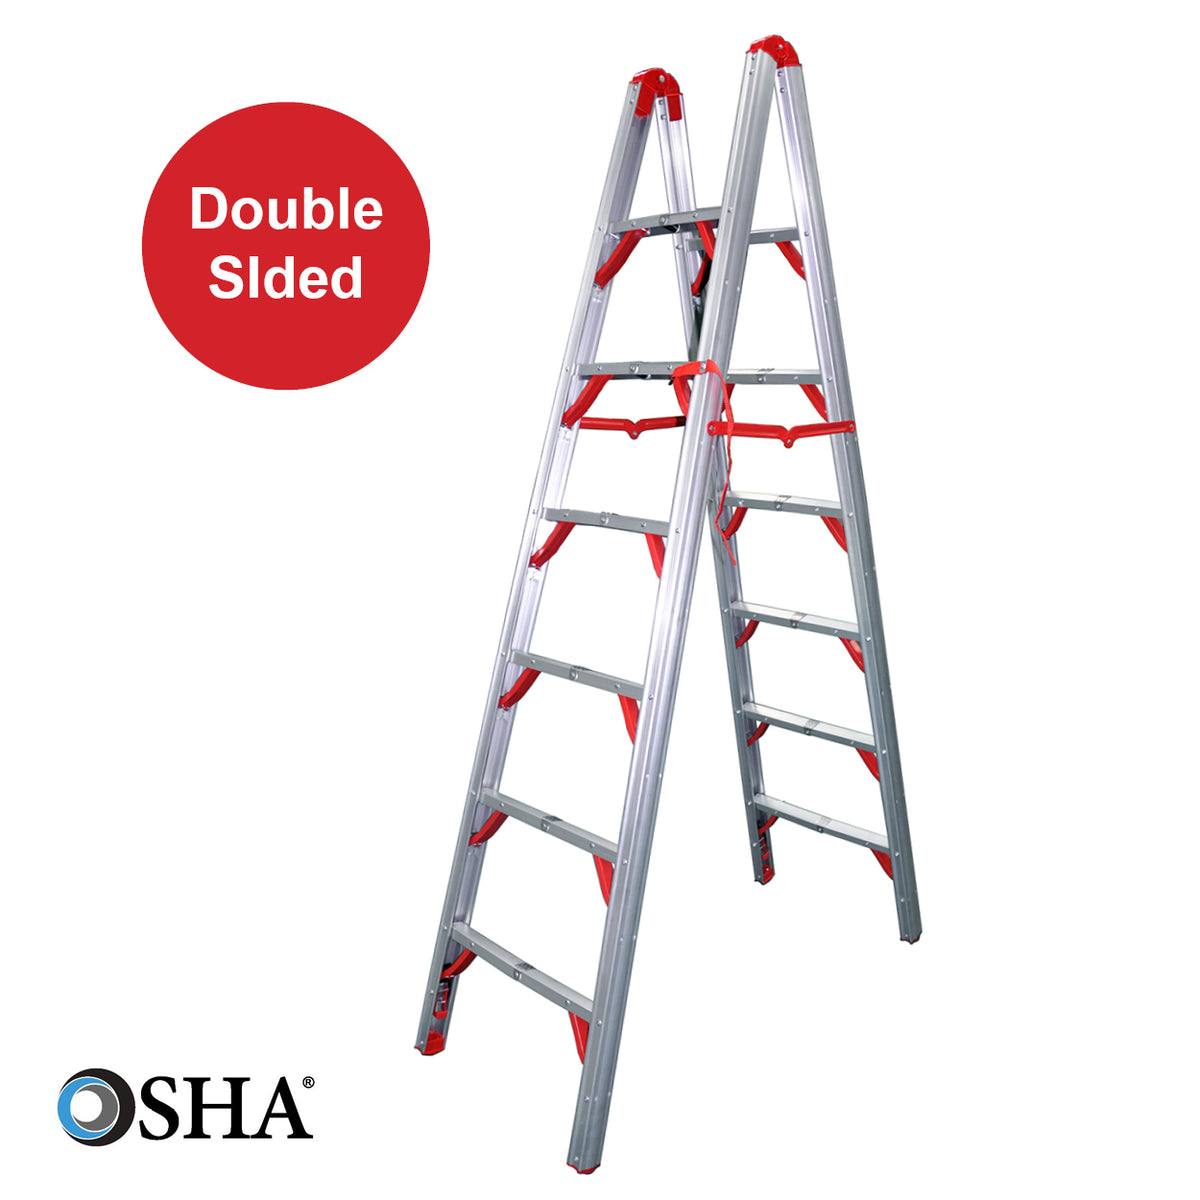 Double sided folding step ladder (STIK) Telesteps Ladders